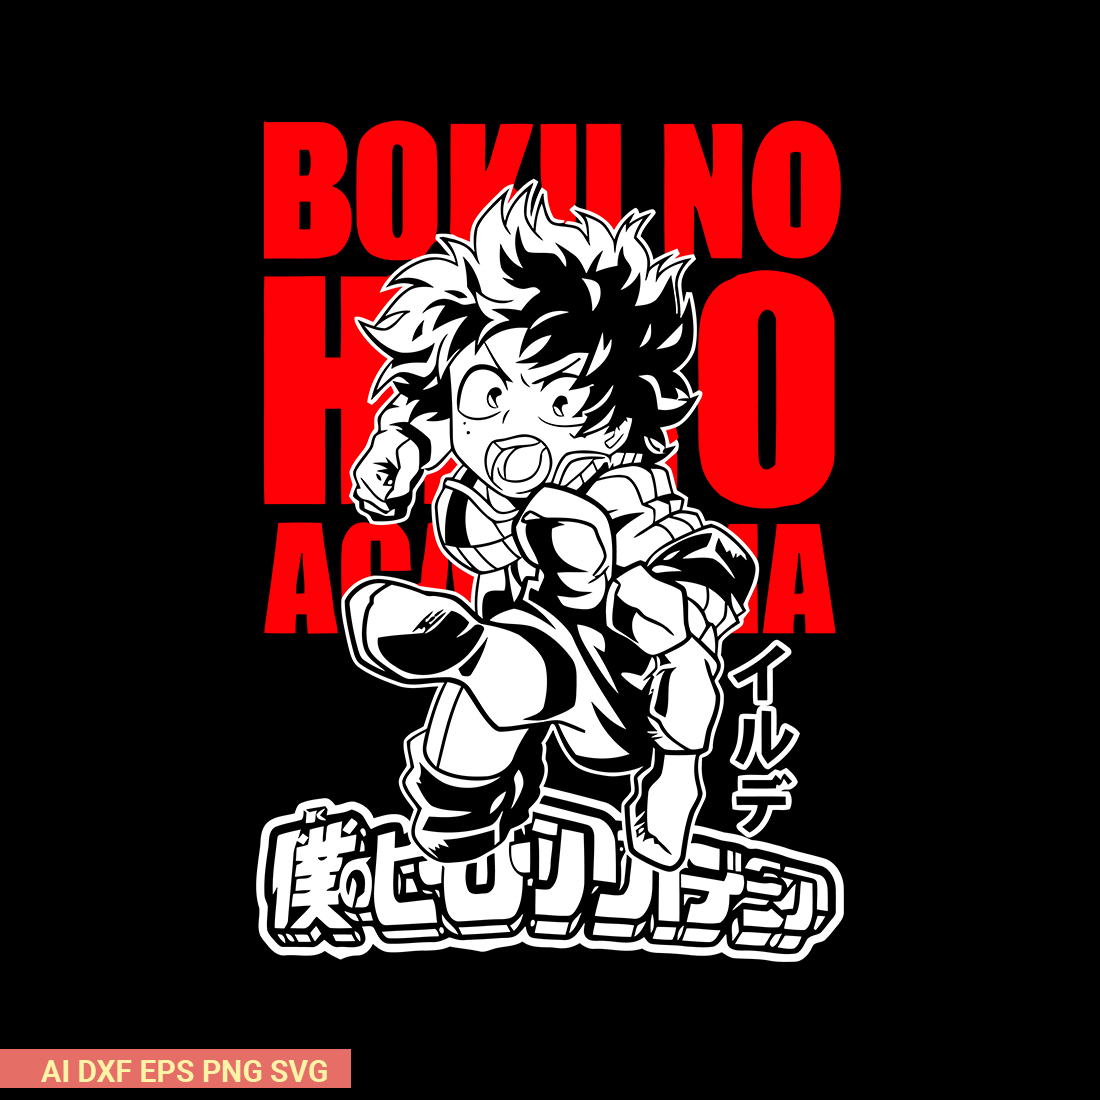 Boku No Hero Academia by irude preview image.